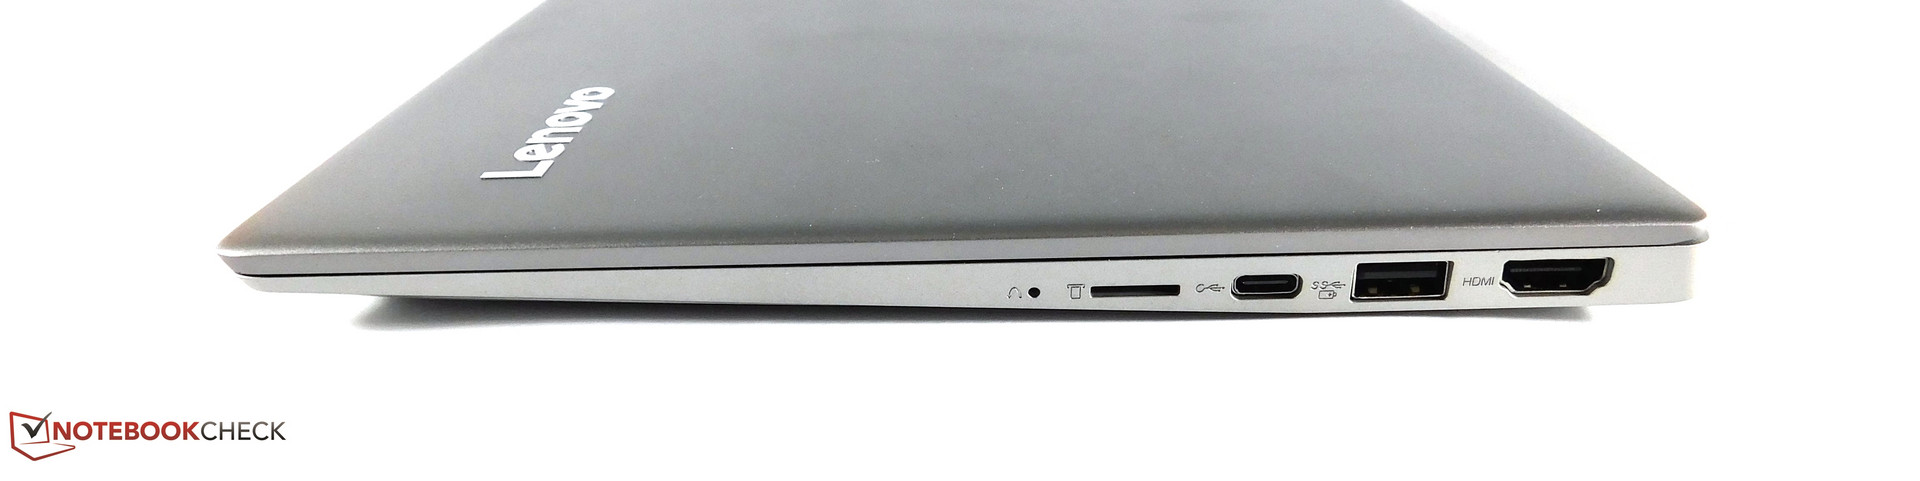 Lenovo IdeaPad (i5-8250U, MX150) Laptop Review - Reviews